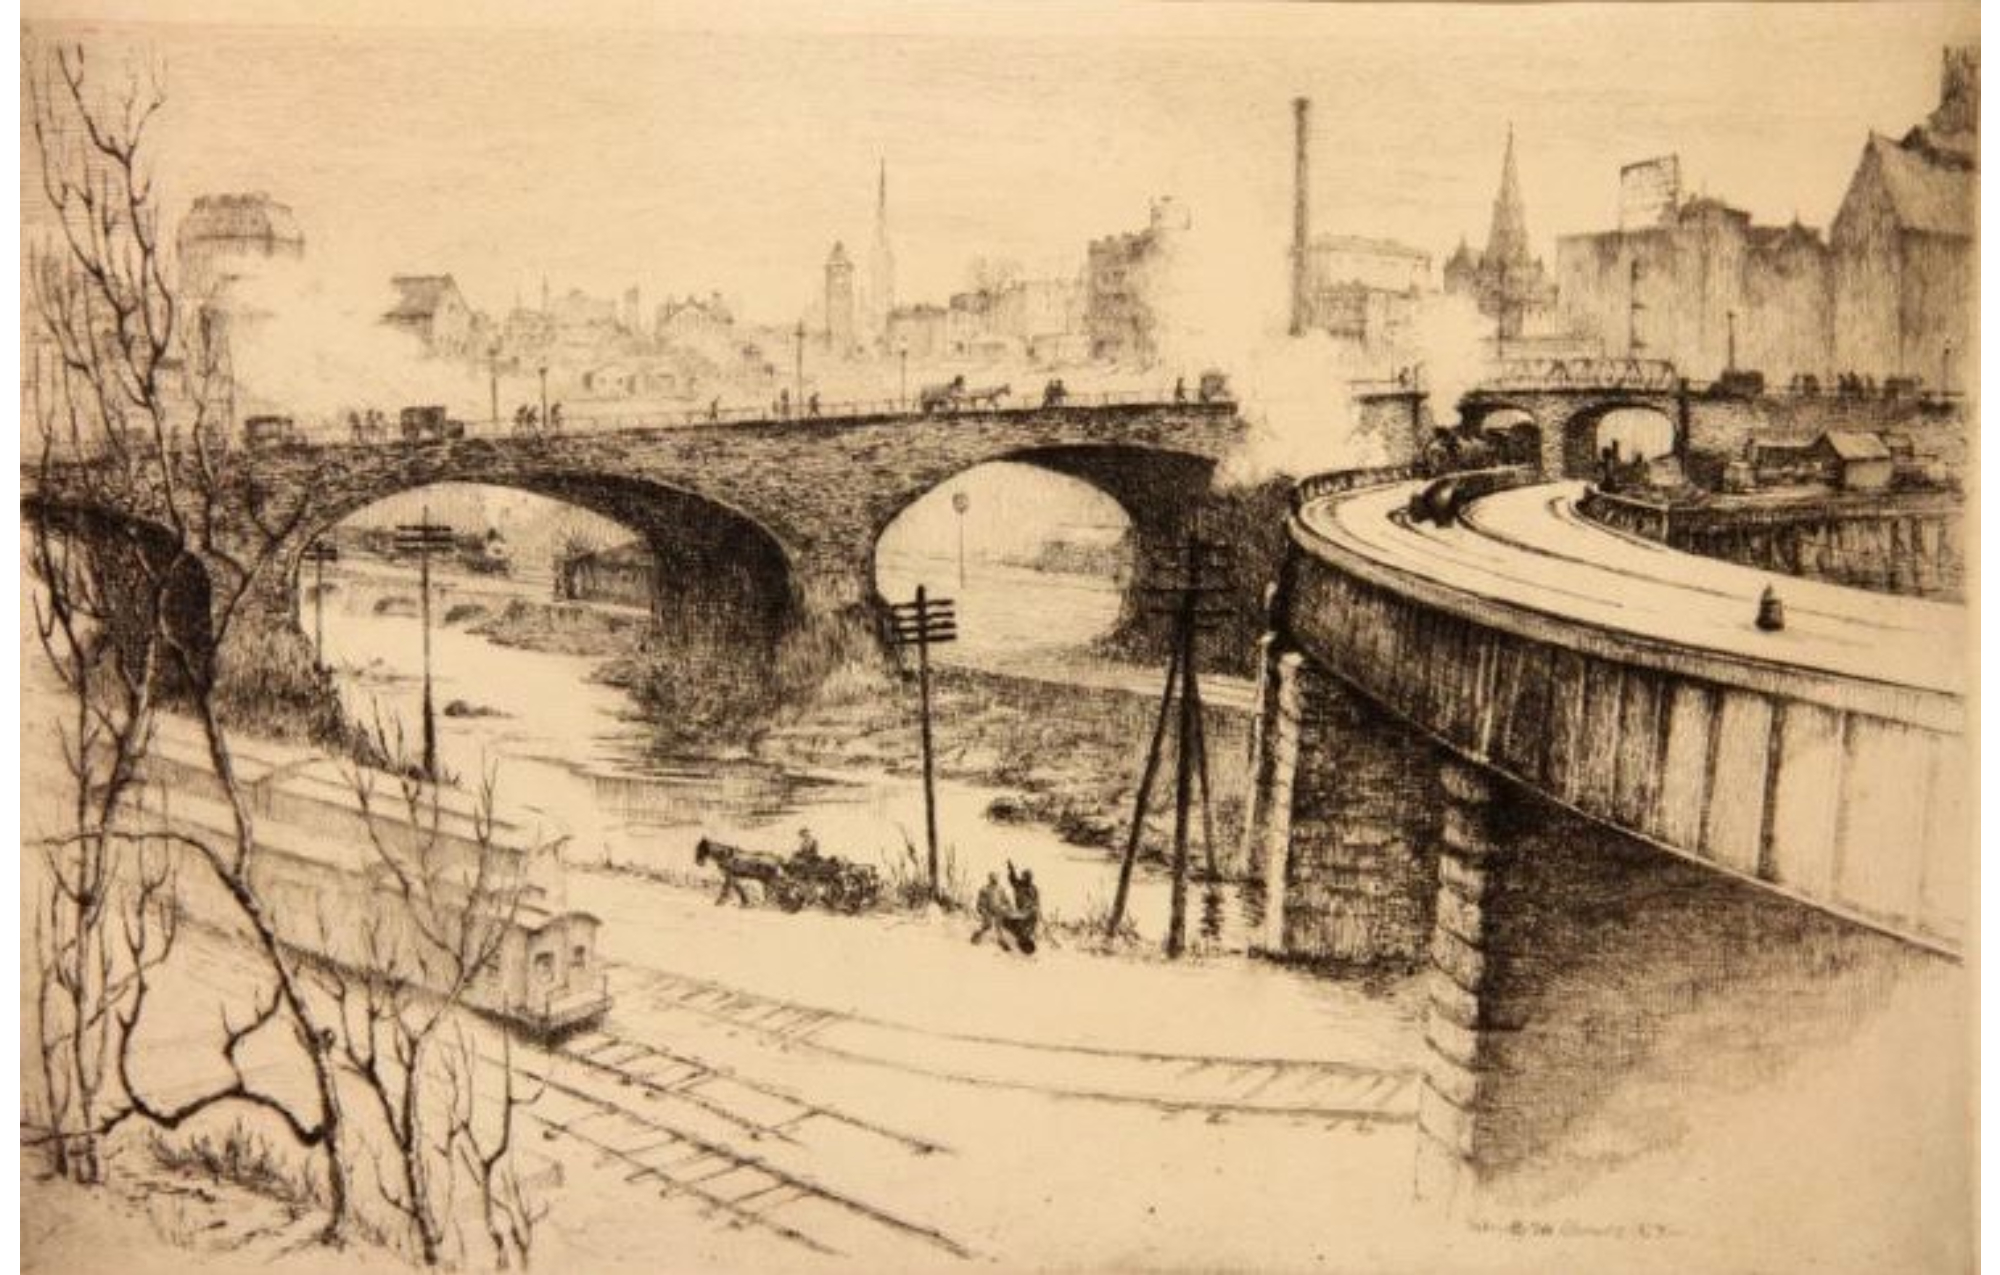 Pedestrian bridge over a river, railroad tracks and train alongside river, cityscape in the background.